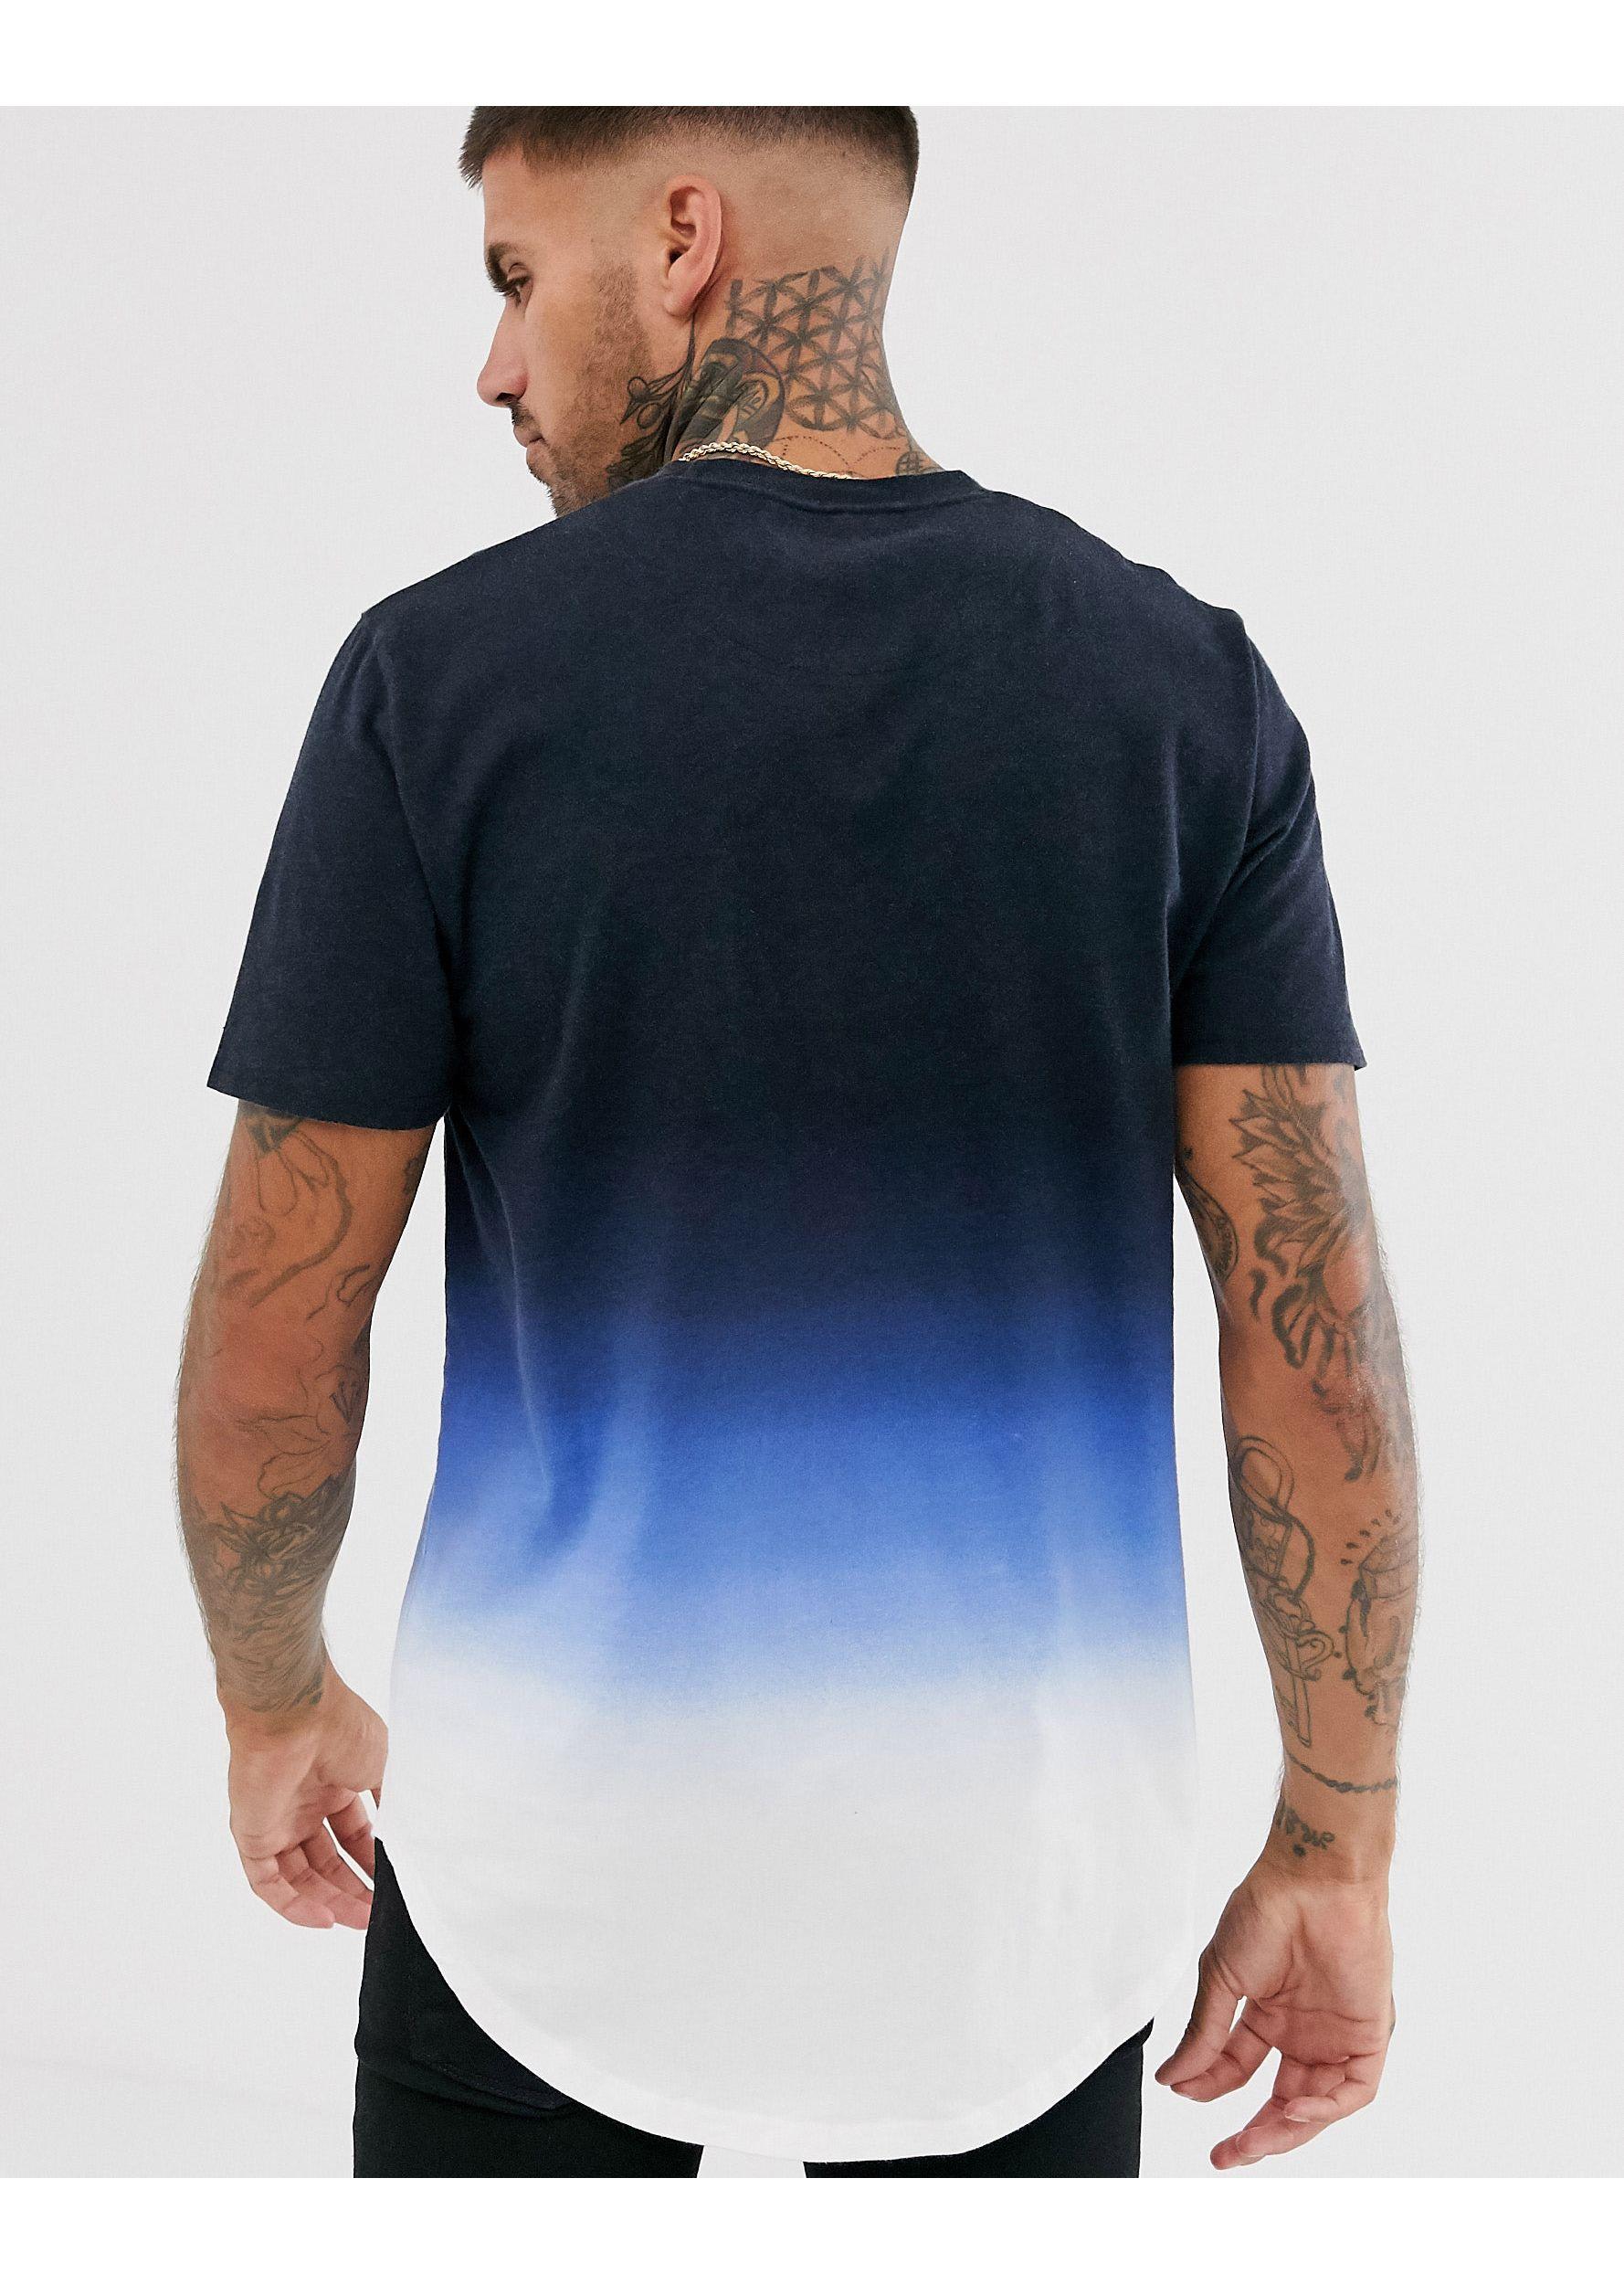 Starcove Black Blue Ombre Tshirt, Gradient Dip Dye Men Women Adult Aesthetic Crewneck Designer Tee Short Sleeve Shirt Top 4 oz. / Black Stitching / L